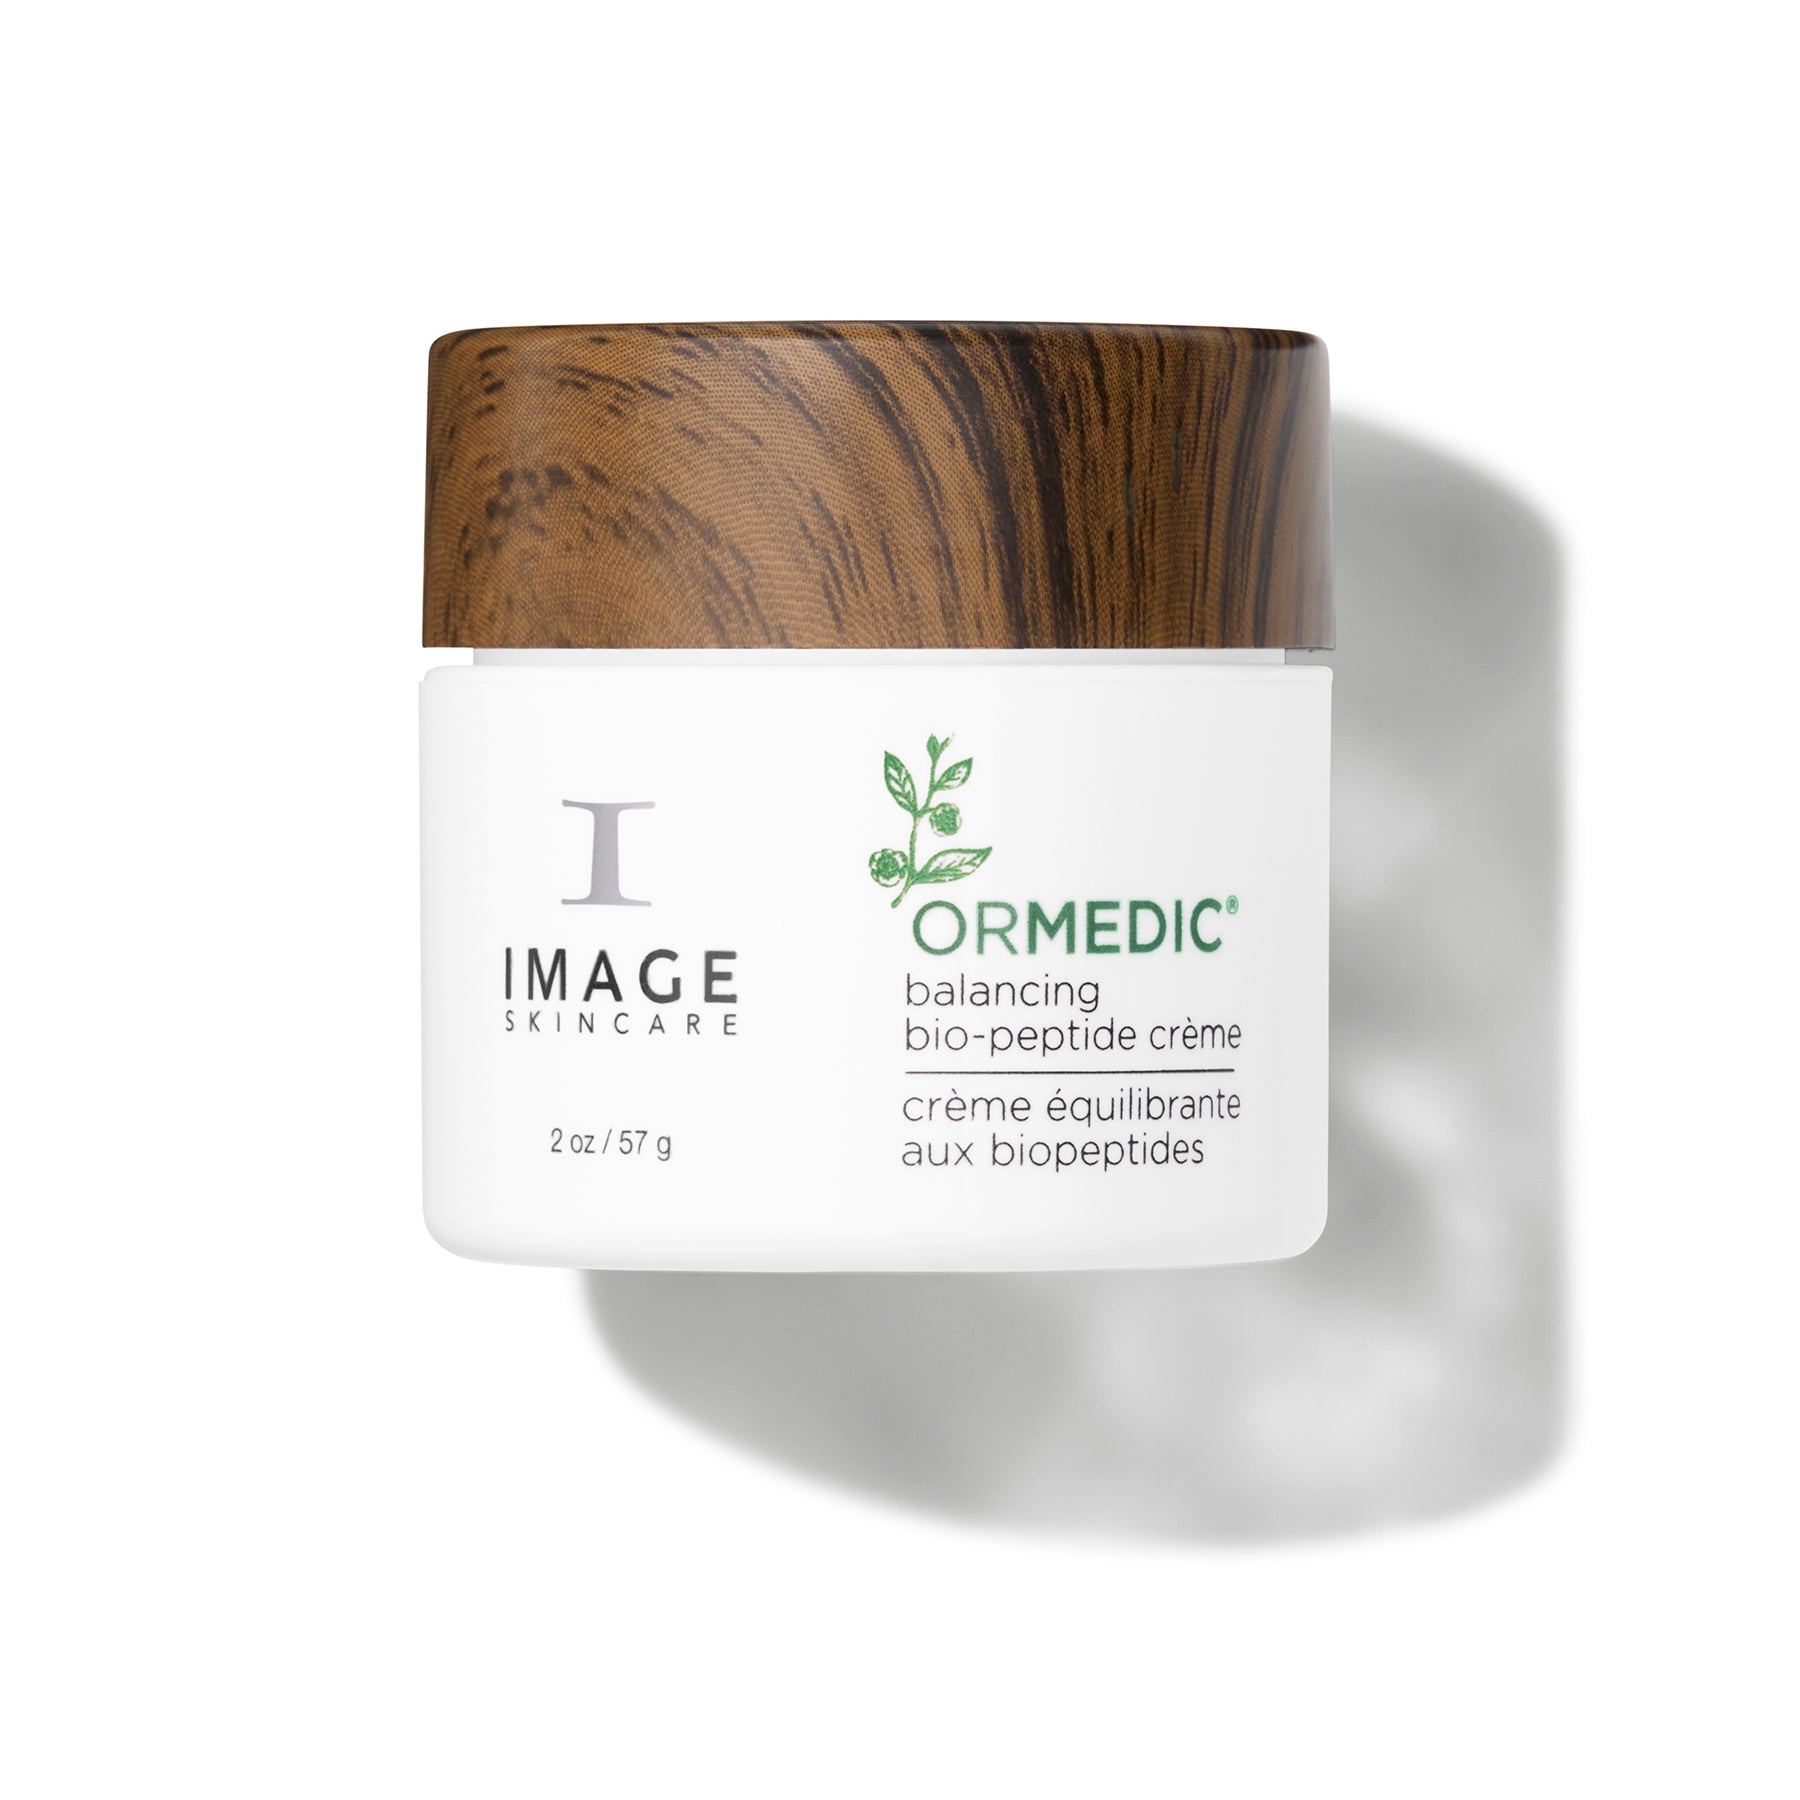 Image Skincare Ormedic Bio-Peptide Creme